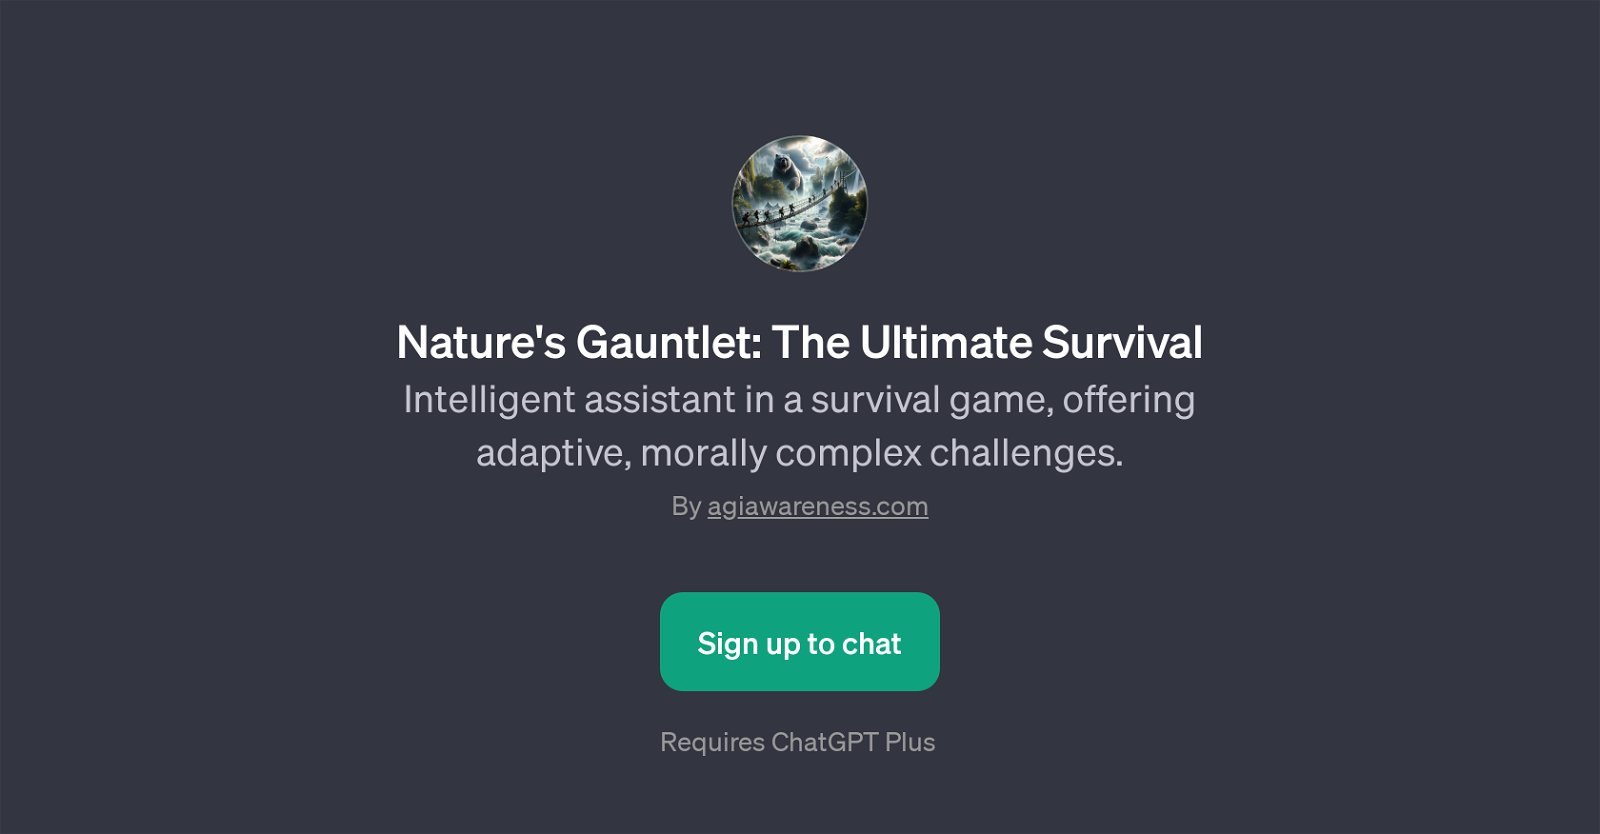 Nature's Gauntlet: The Ultimate Survival website